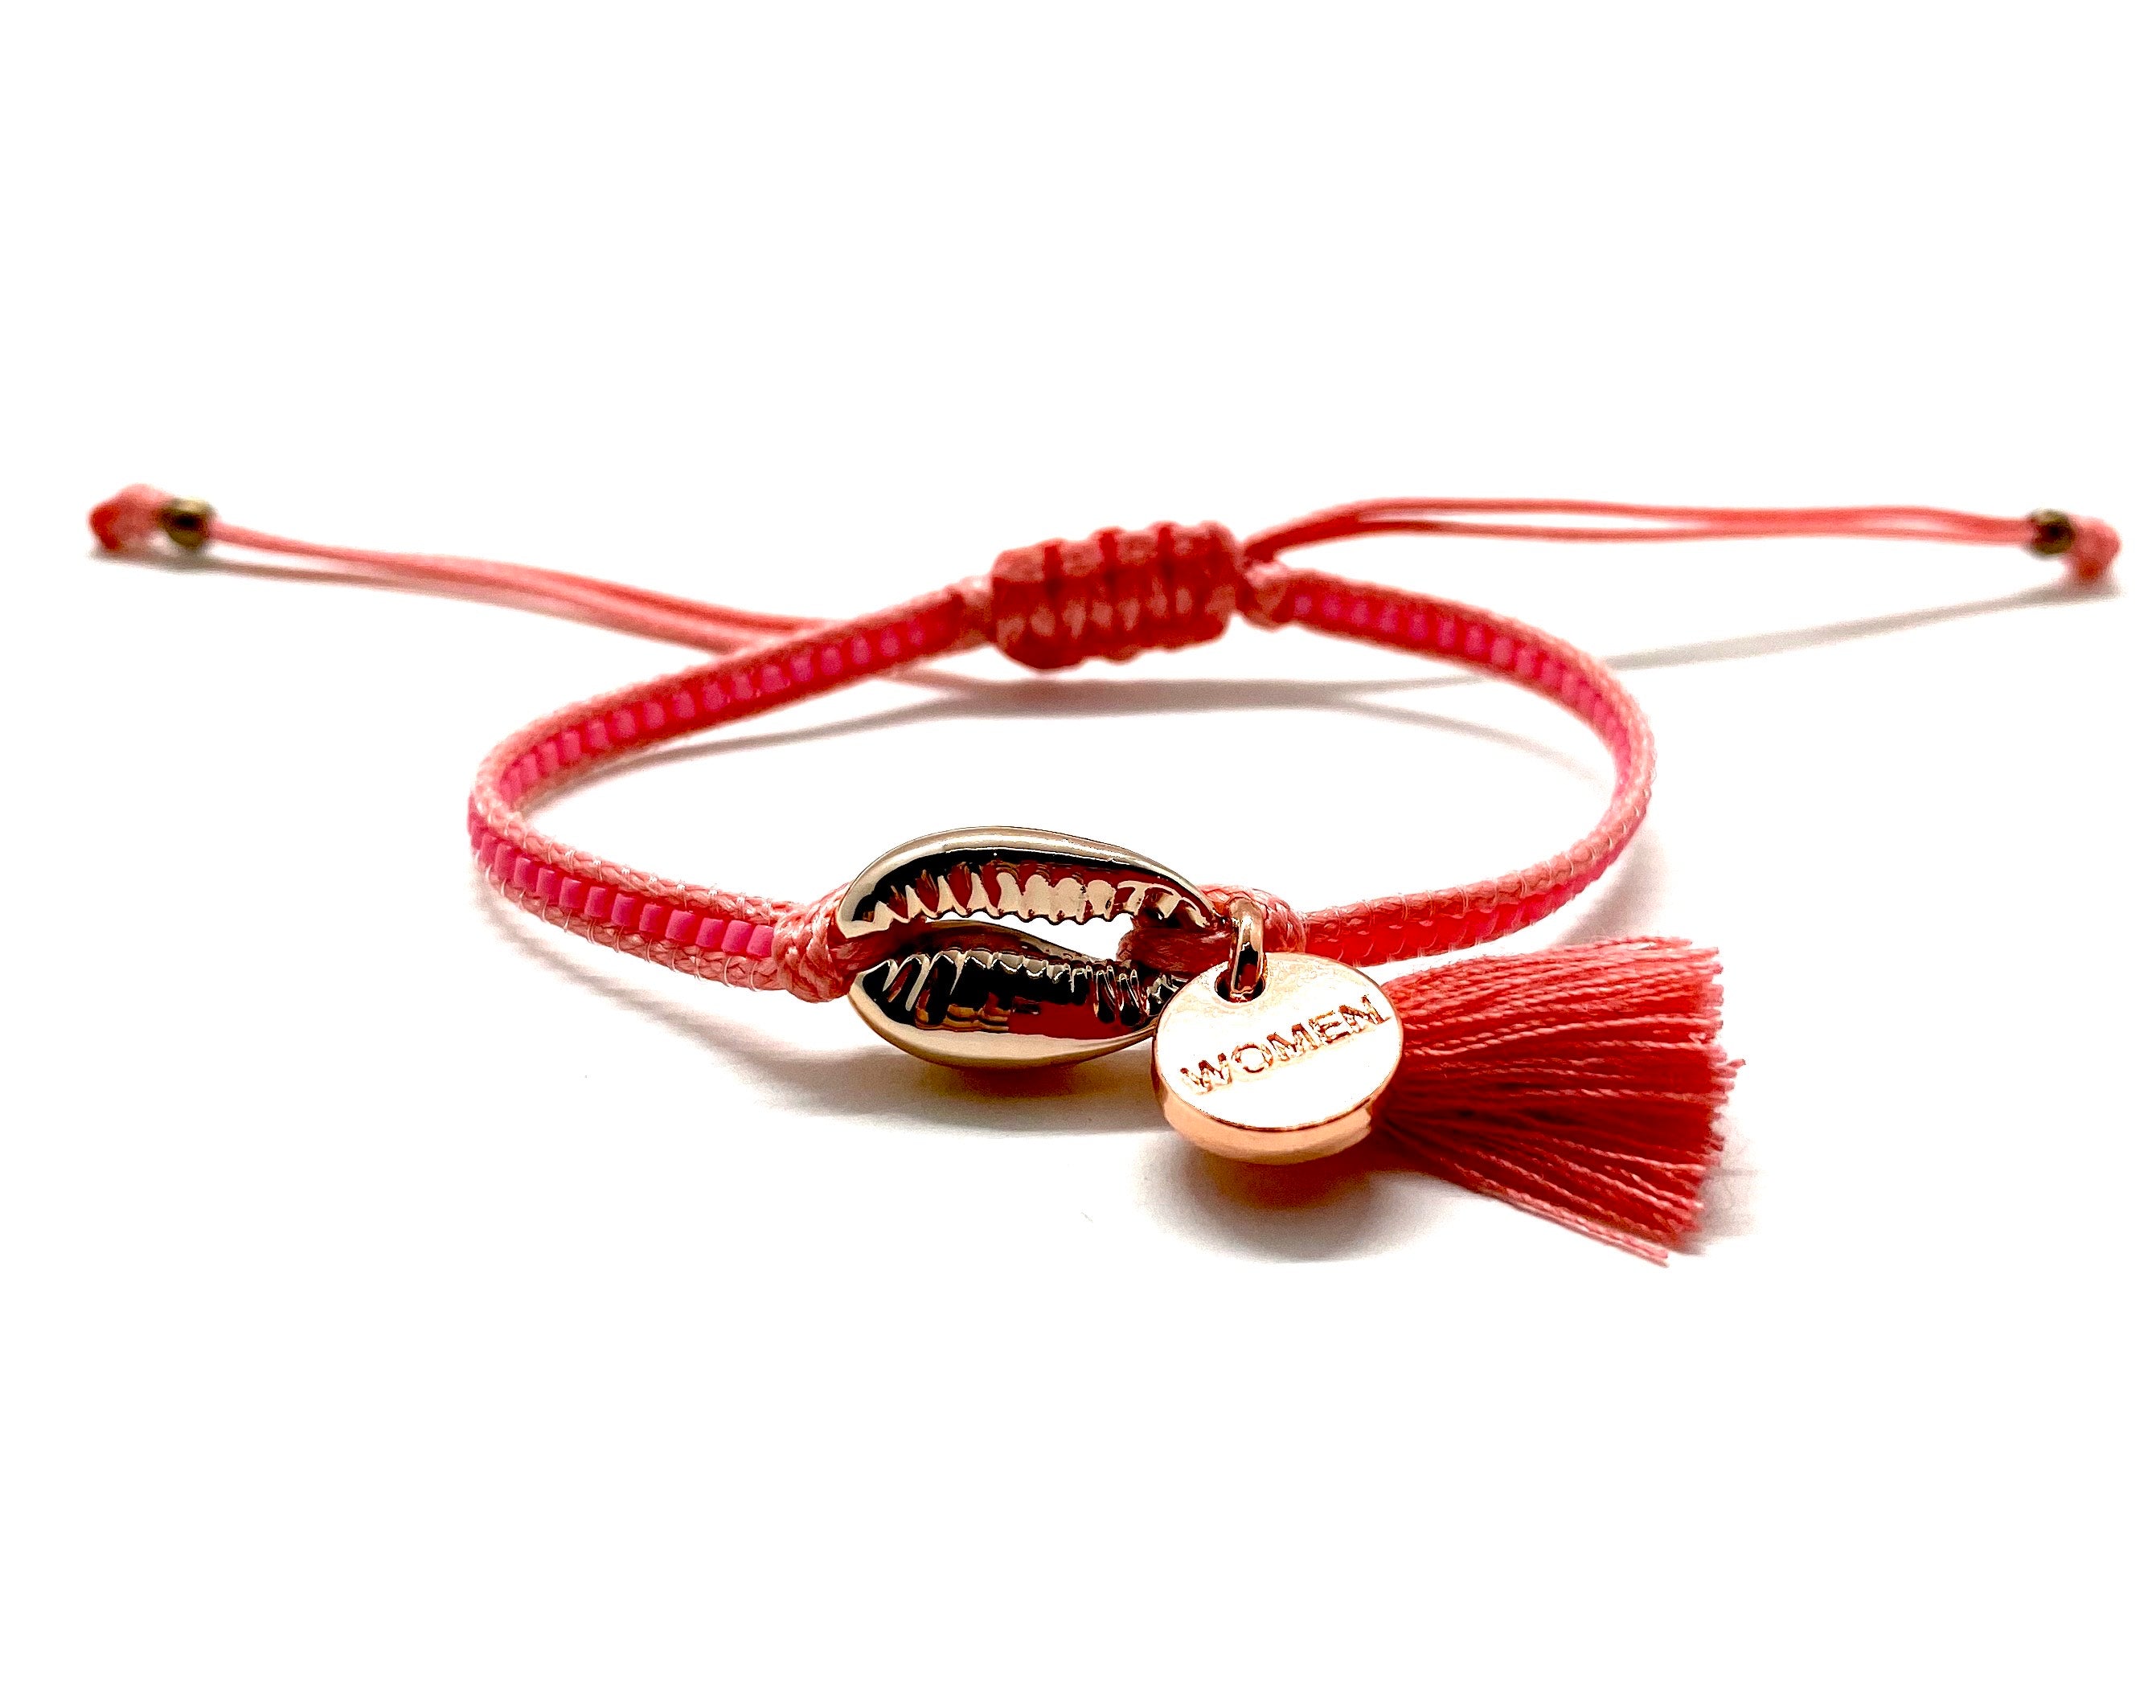 Rose gold shell bracelet with salmon Miyuki beads, cord and tassel